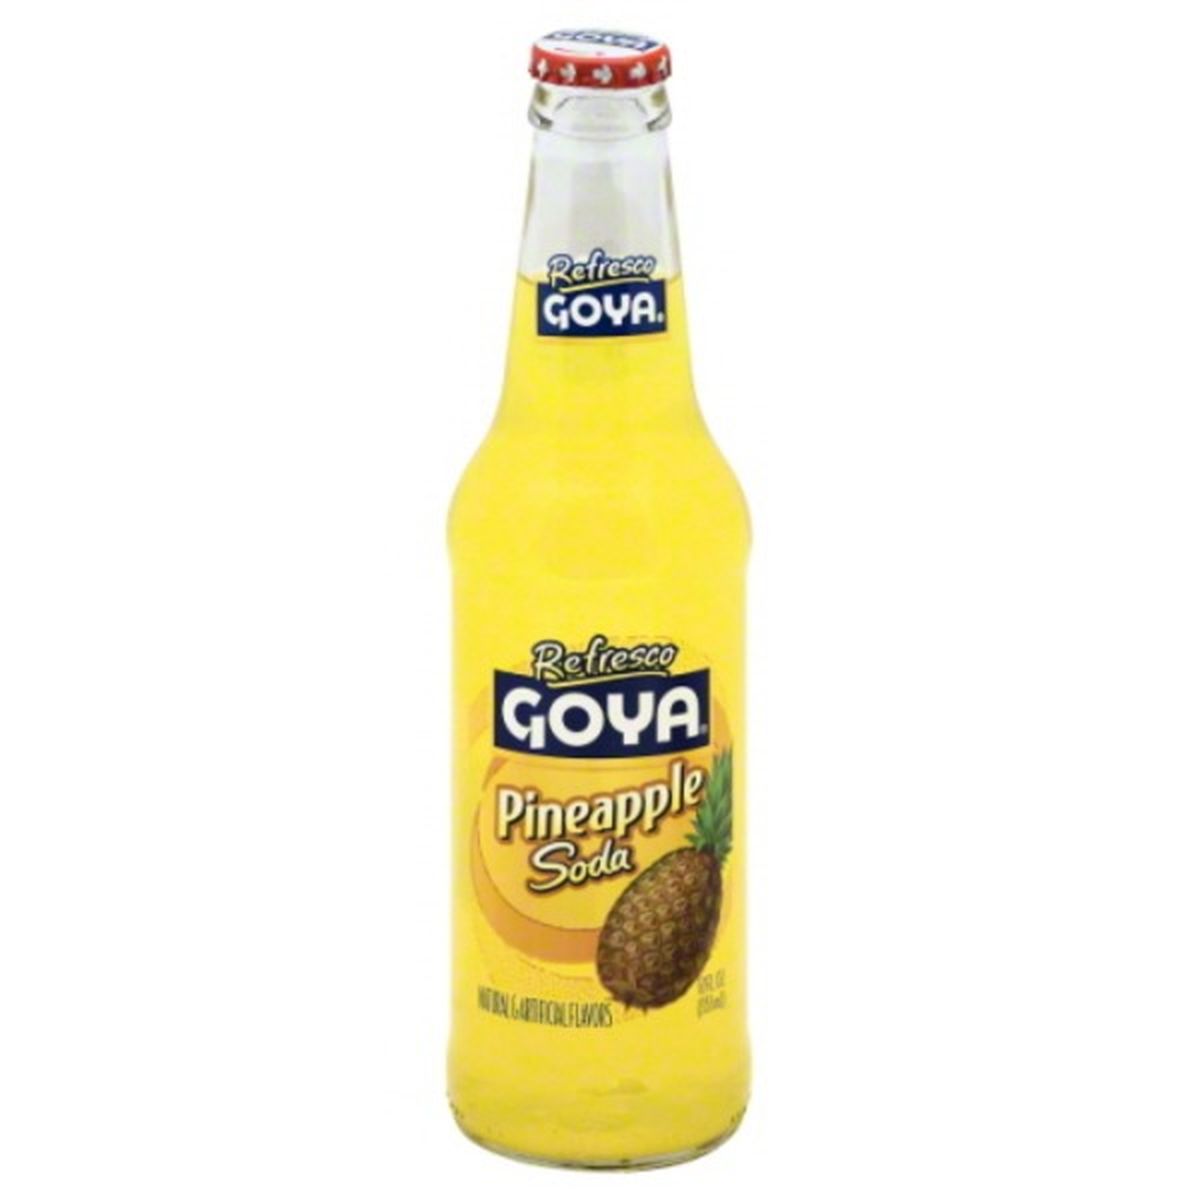 Calories in Goya Refresco Soda, Pineapple